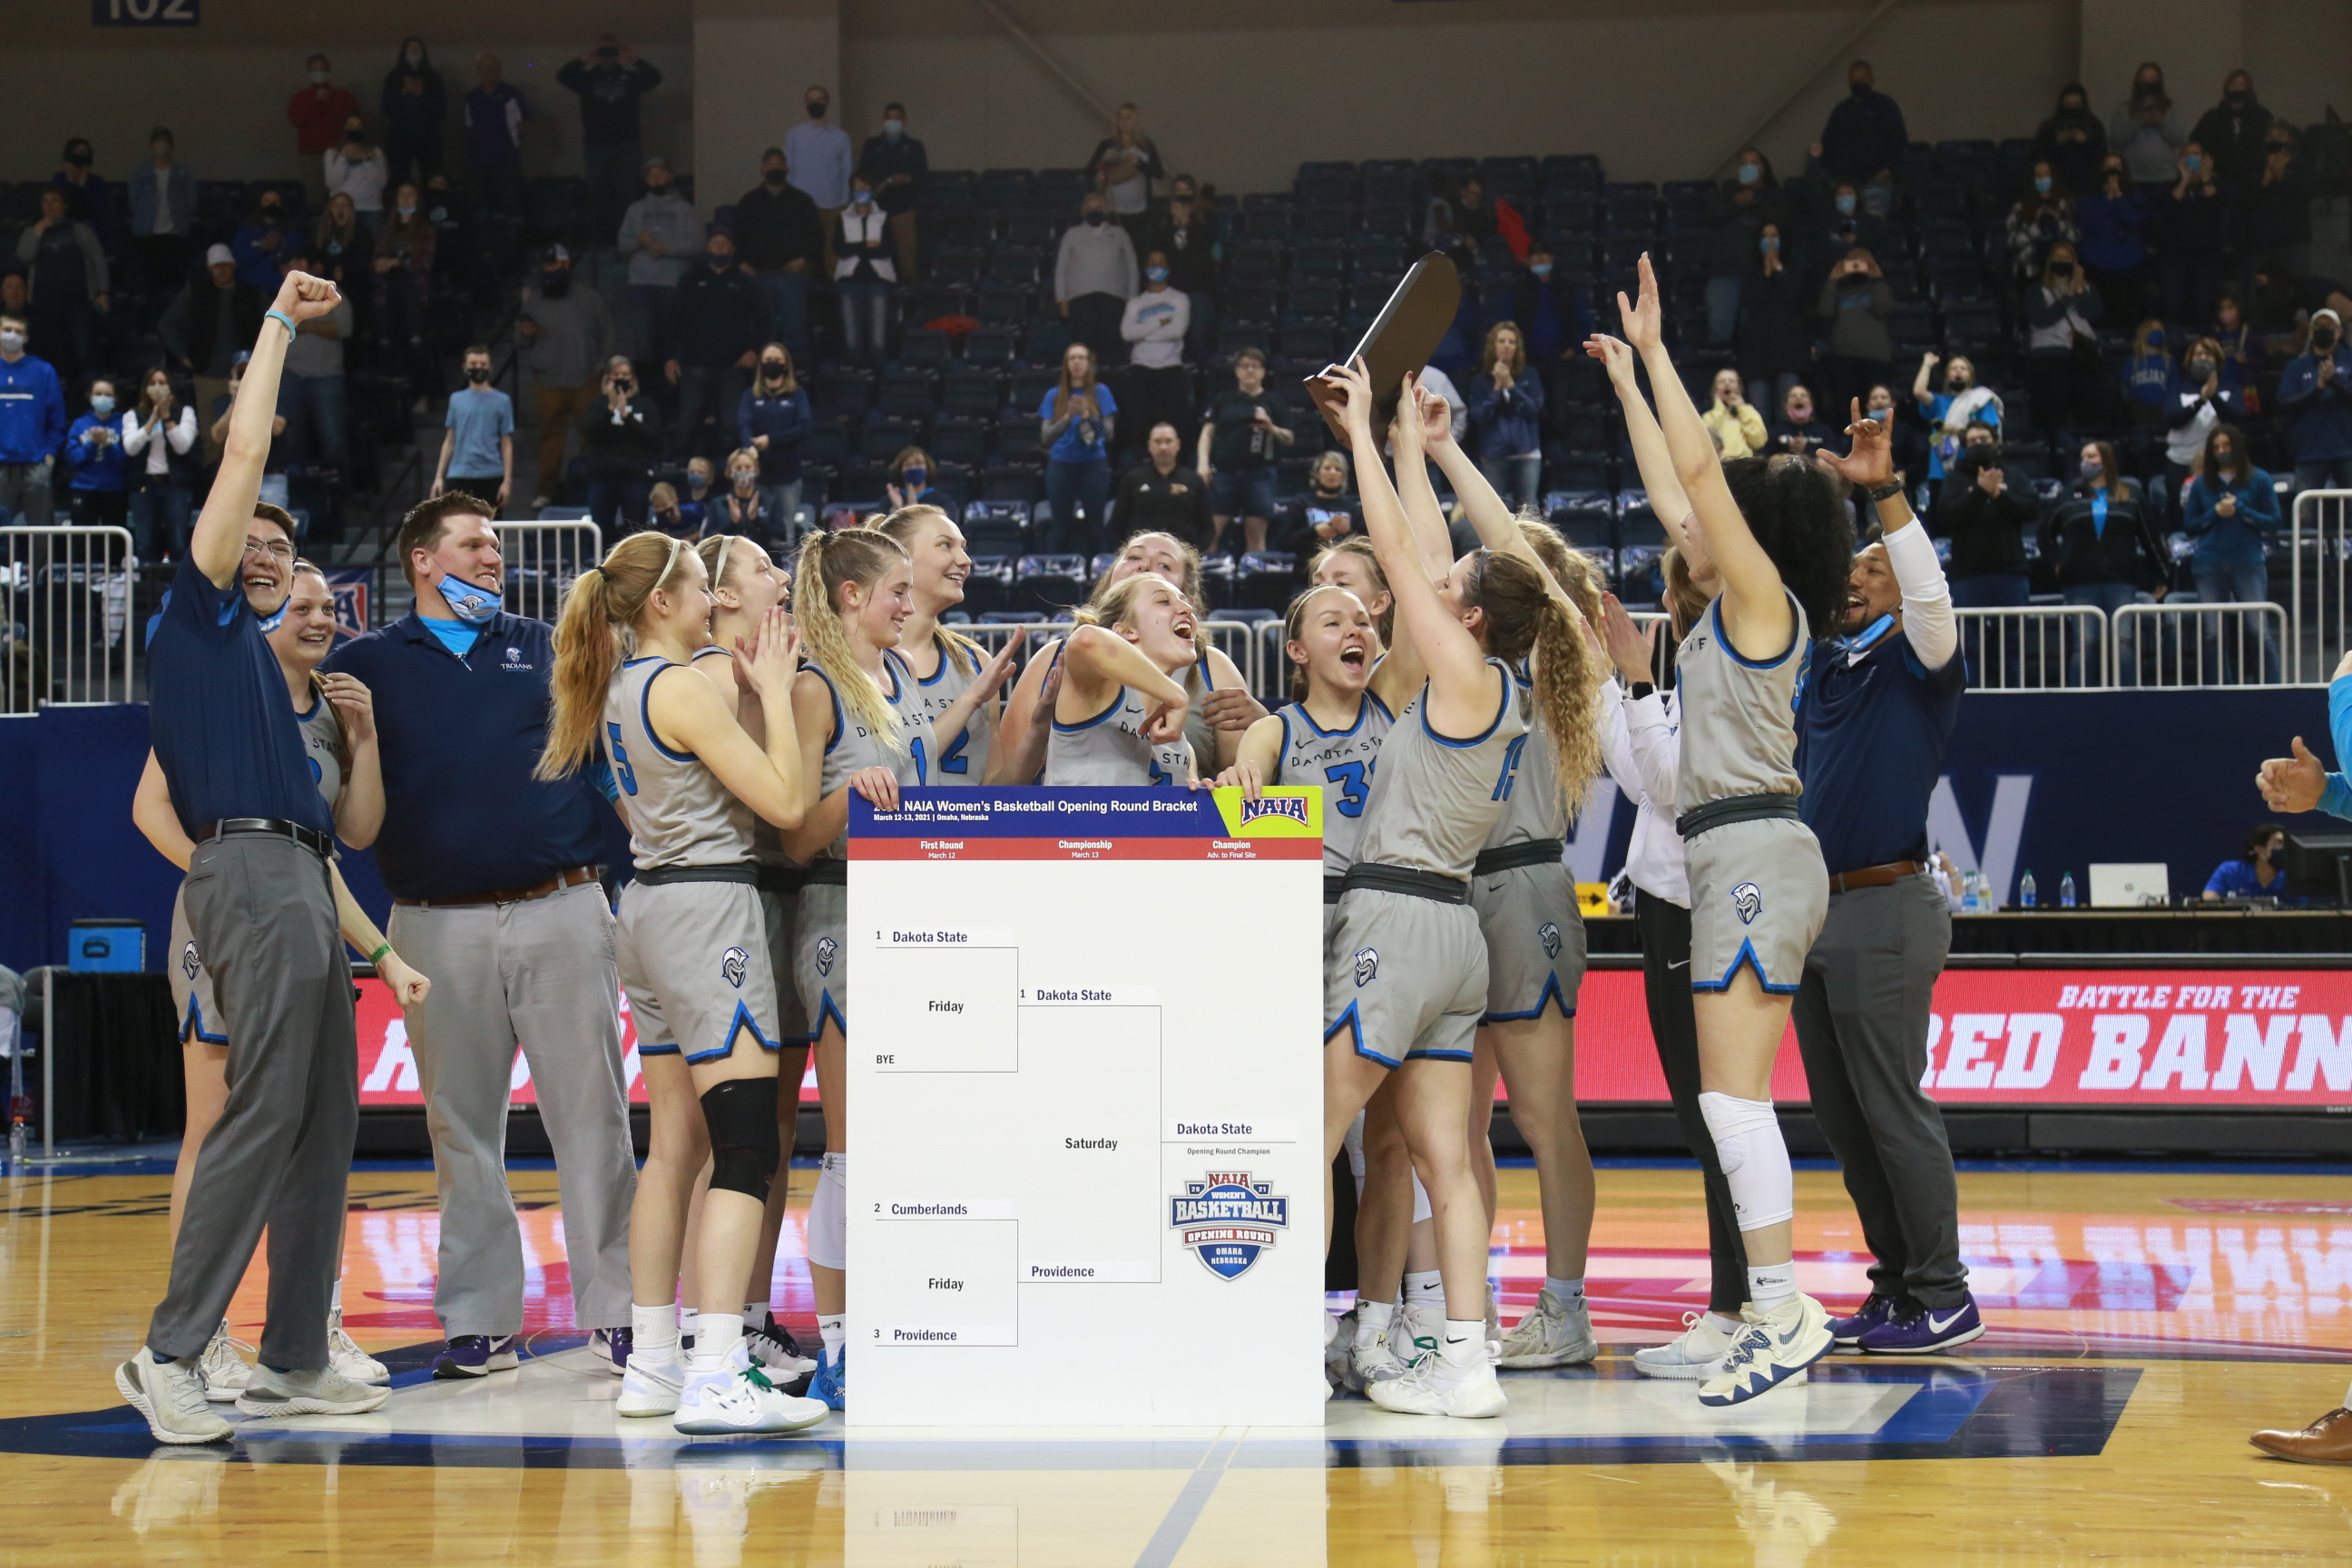 DSU women's basketball team celebrating a win